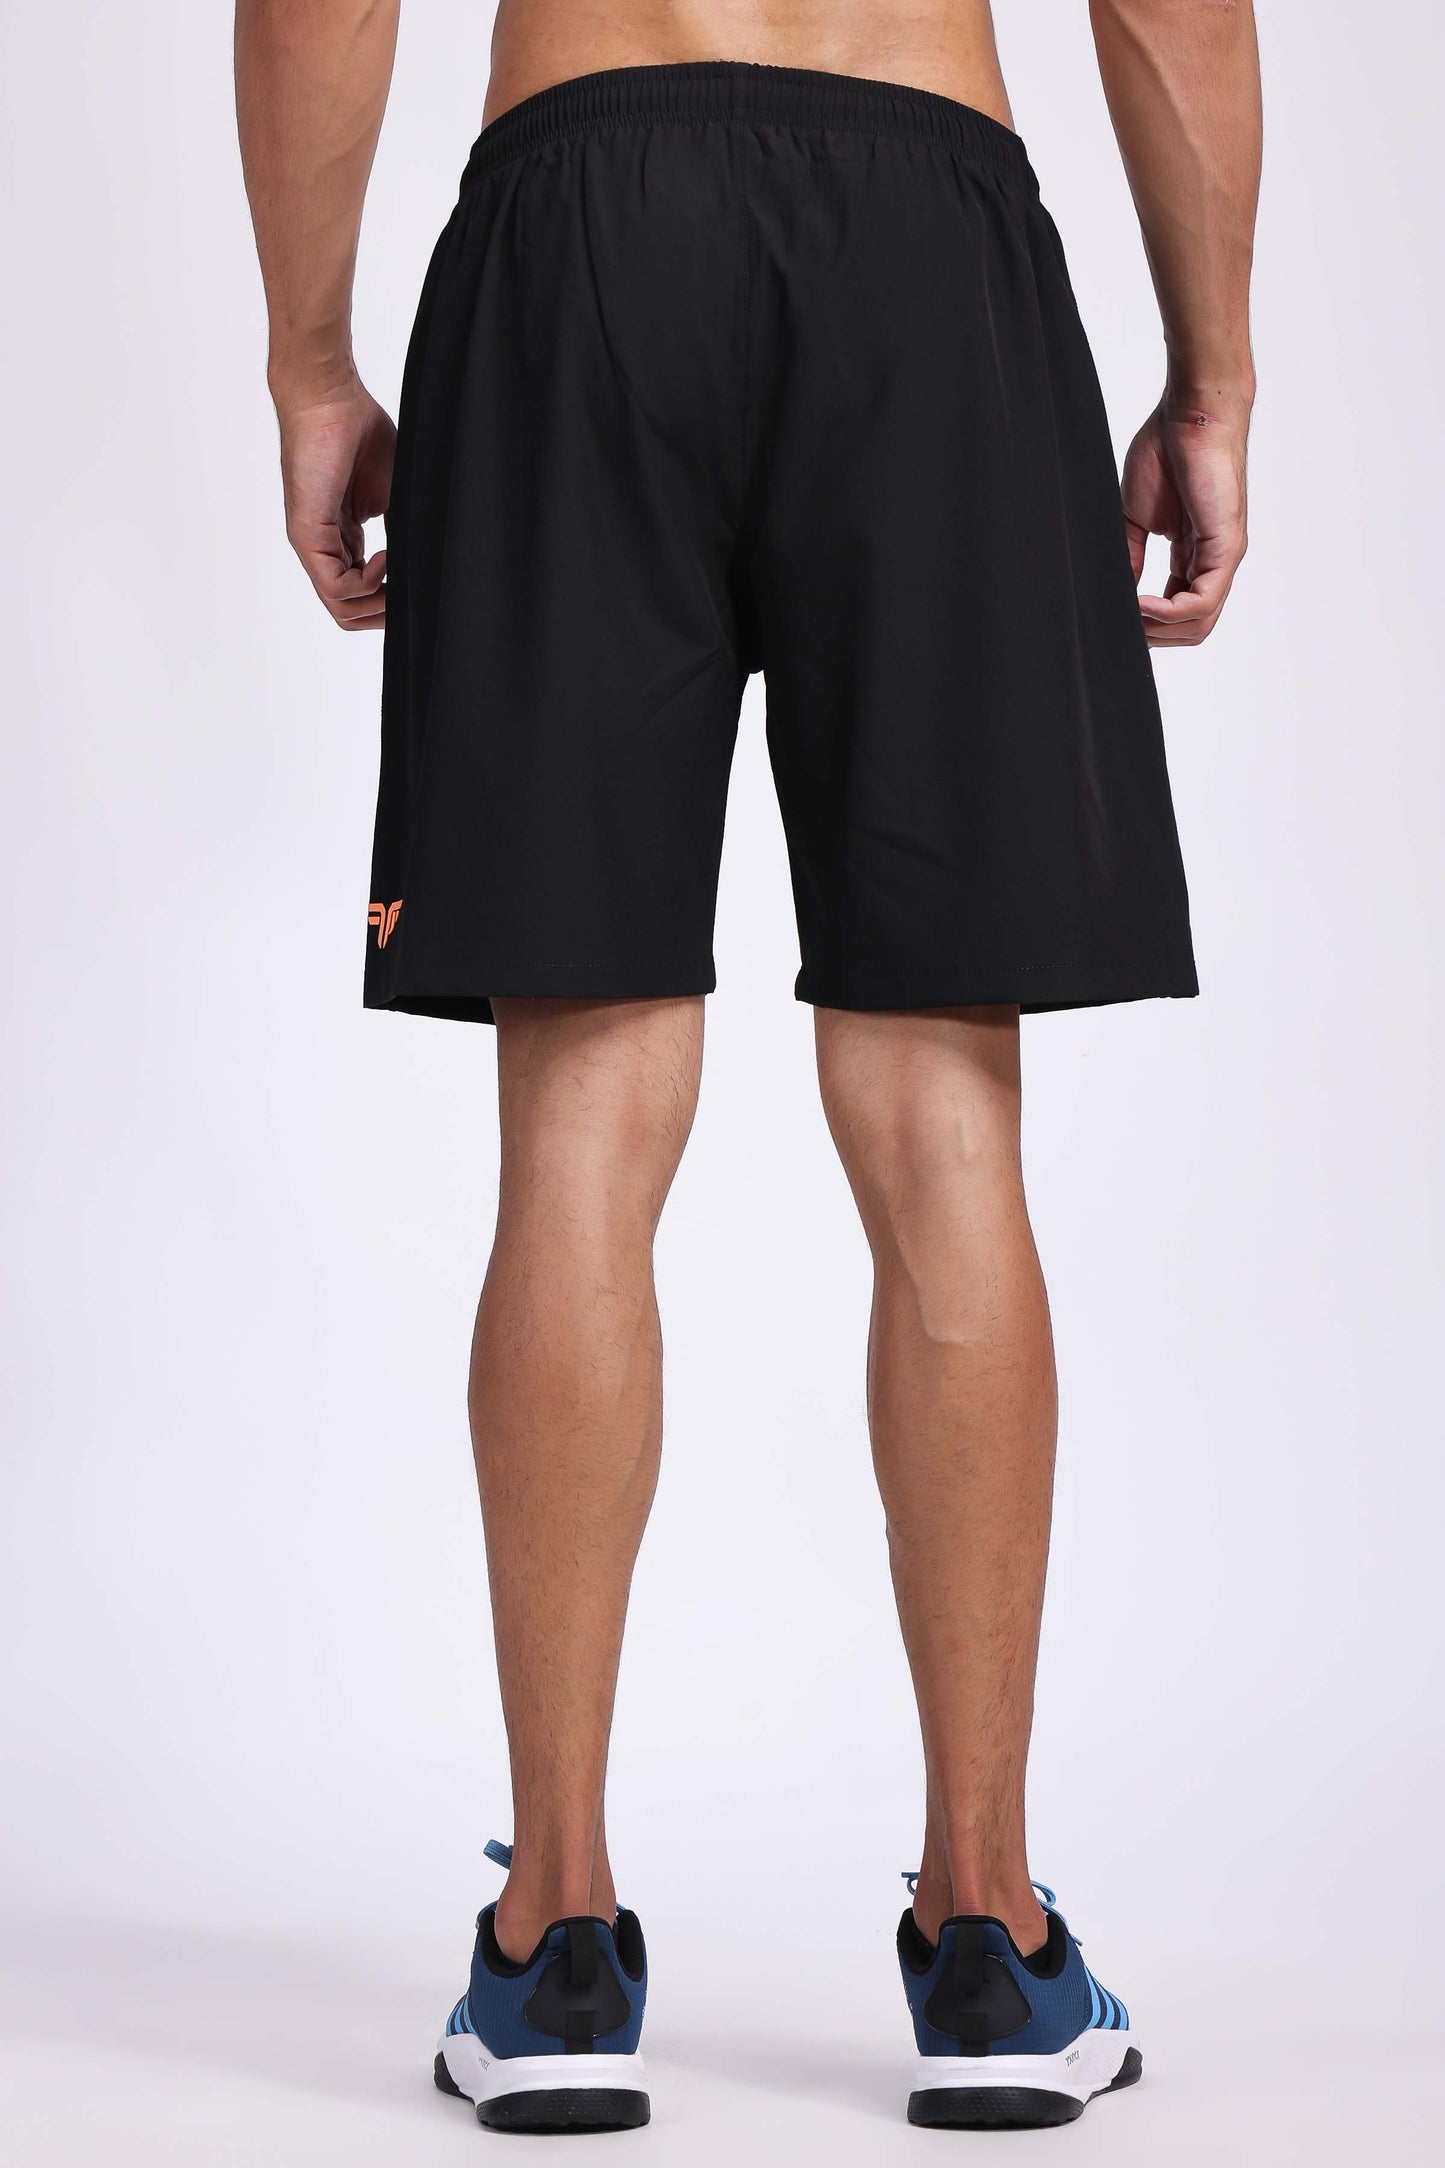 Men's Lycra Training Shorts - Black